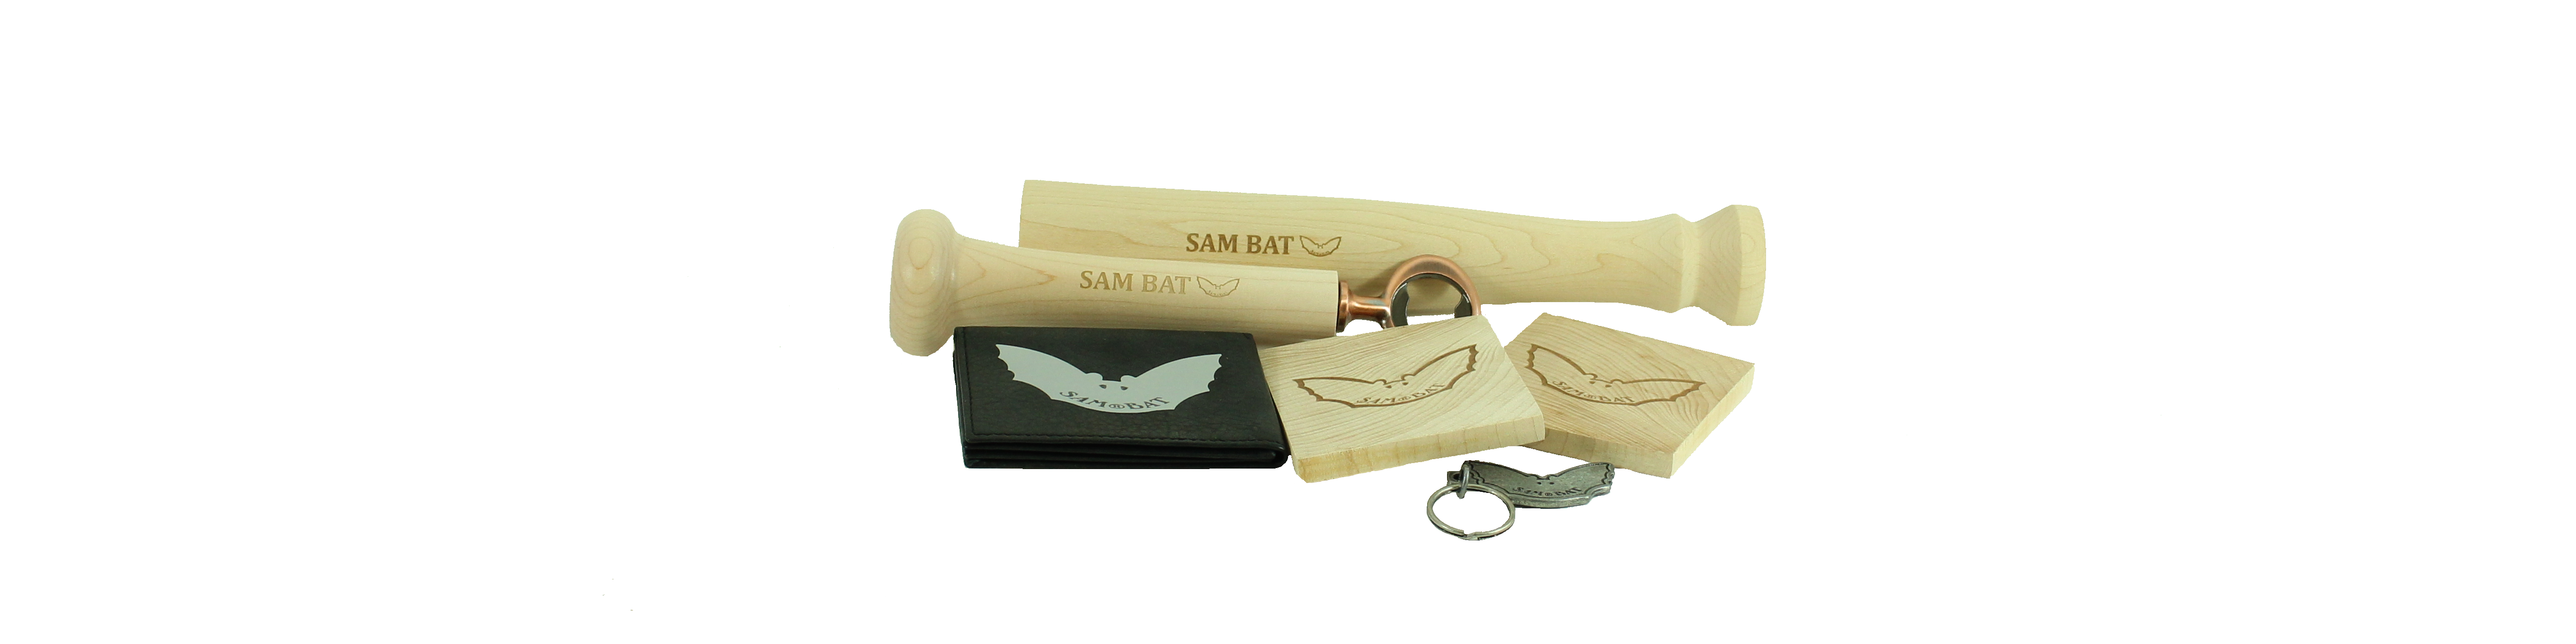 SAM BAT Gift Pack #1